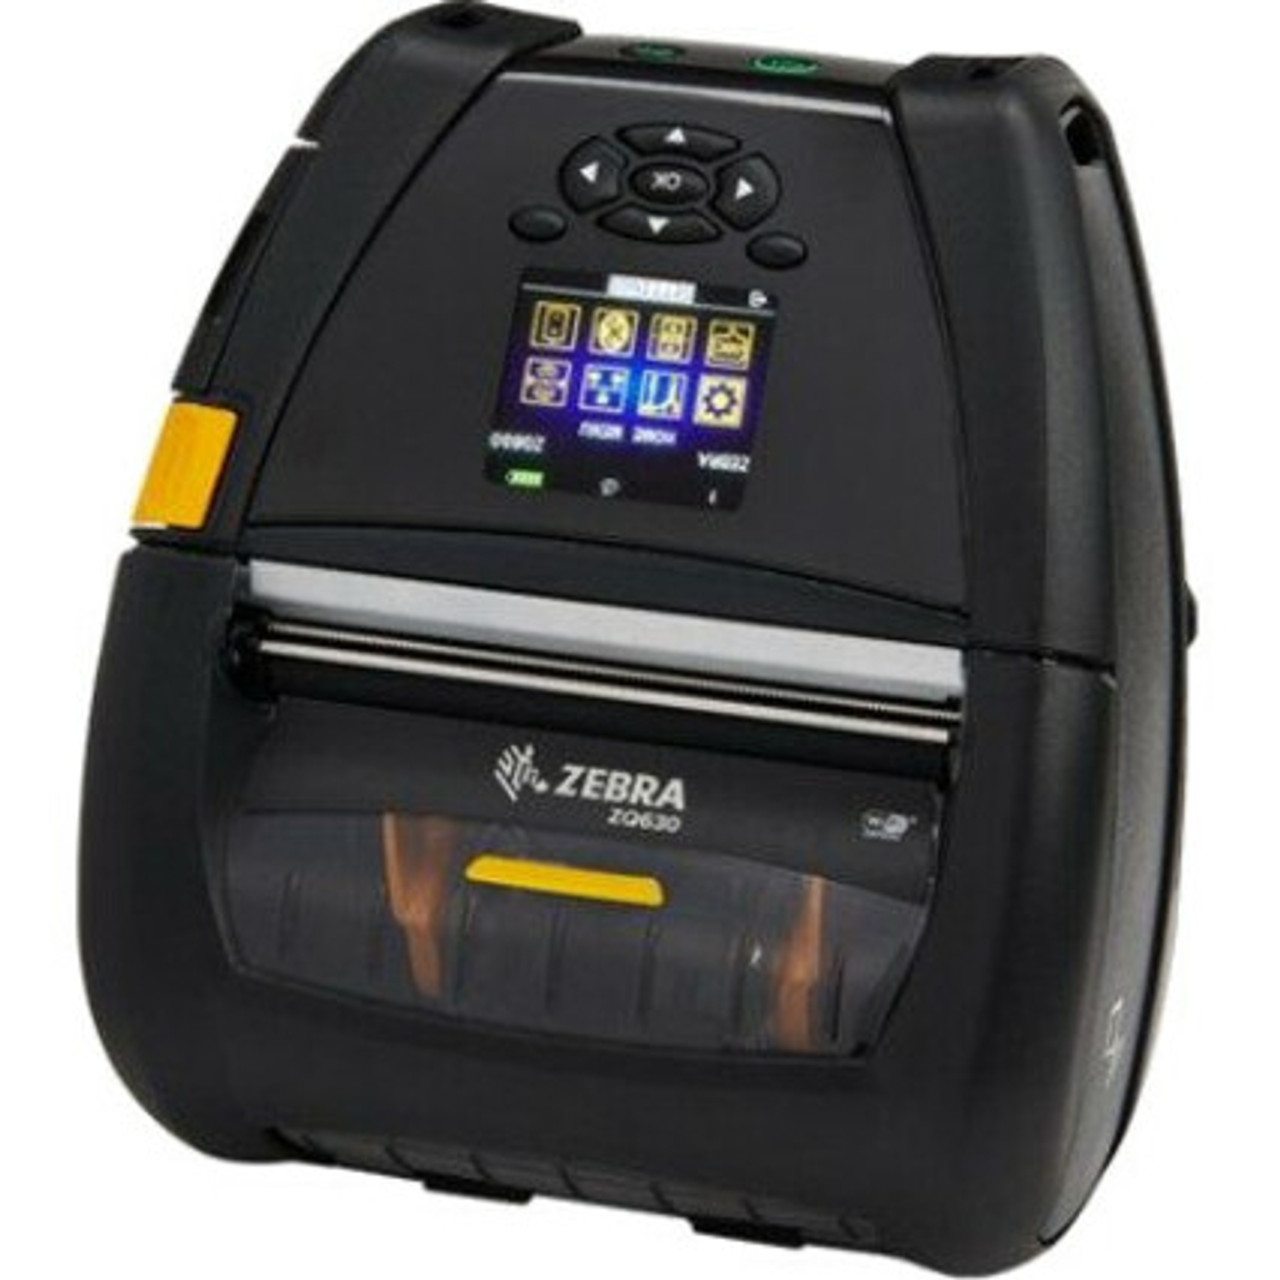 Zebra ZQ630 Mobile Direct Thermal Printer - Monochrome - Handheld - Label Print - Bluetooth - Near Field Communication (NFC) - RFID - ZQ63-AUFAL00-00